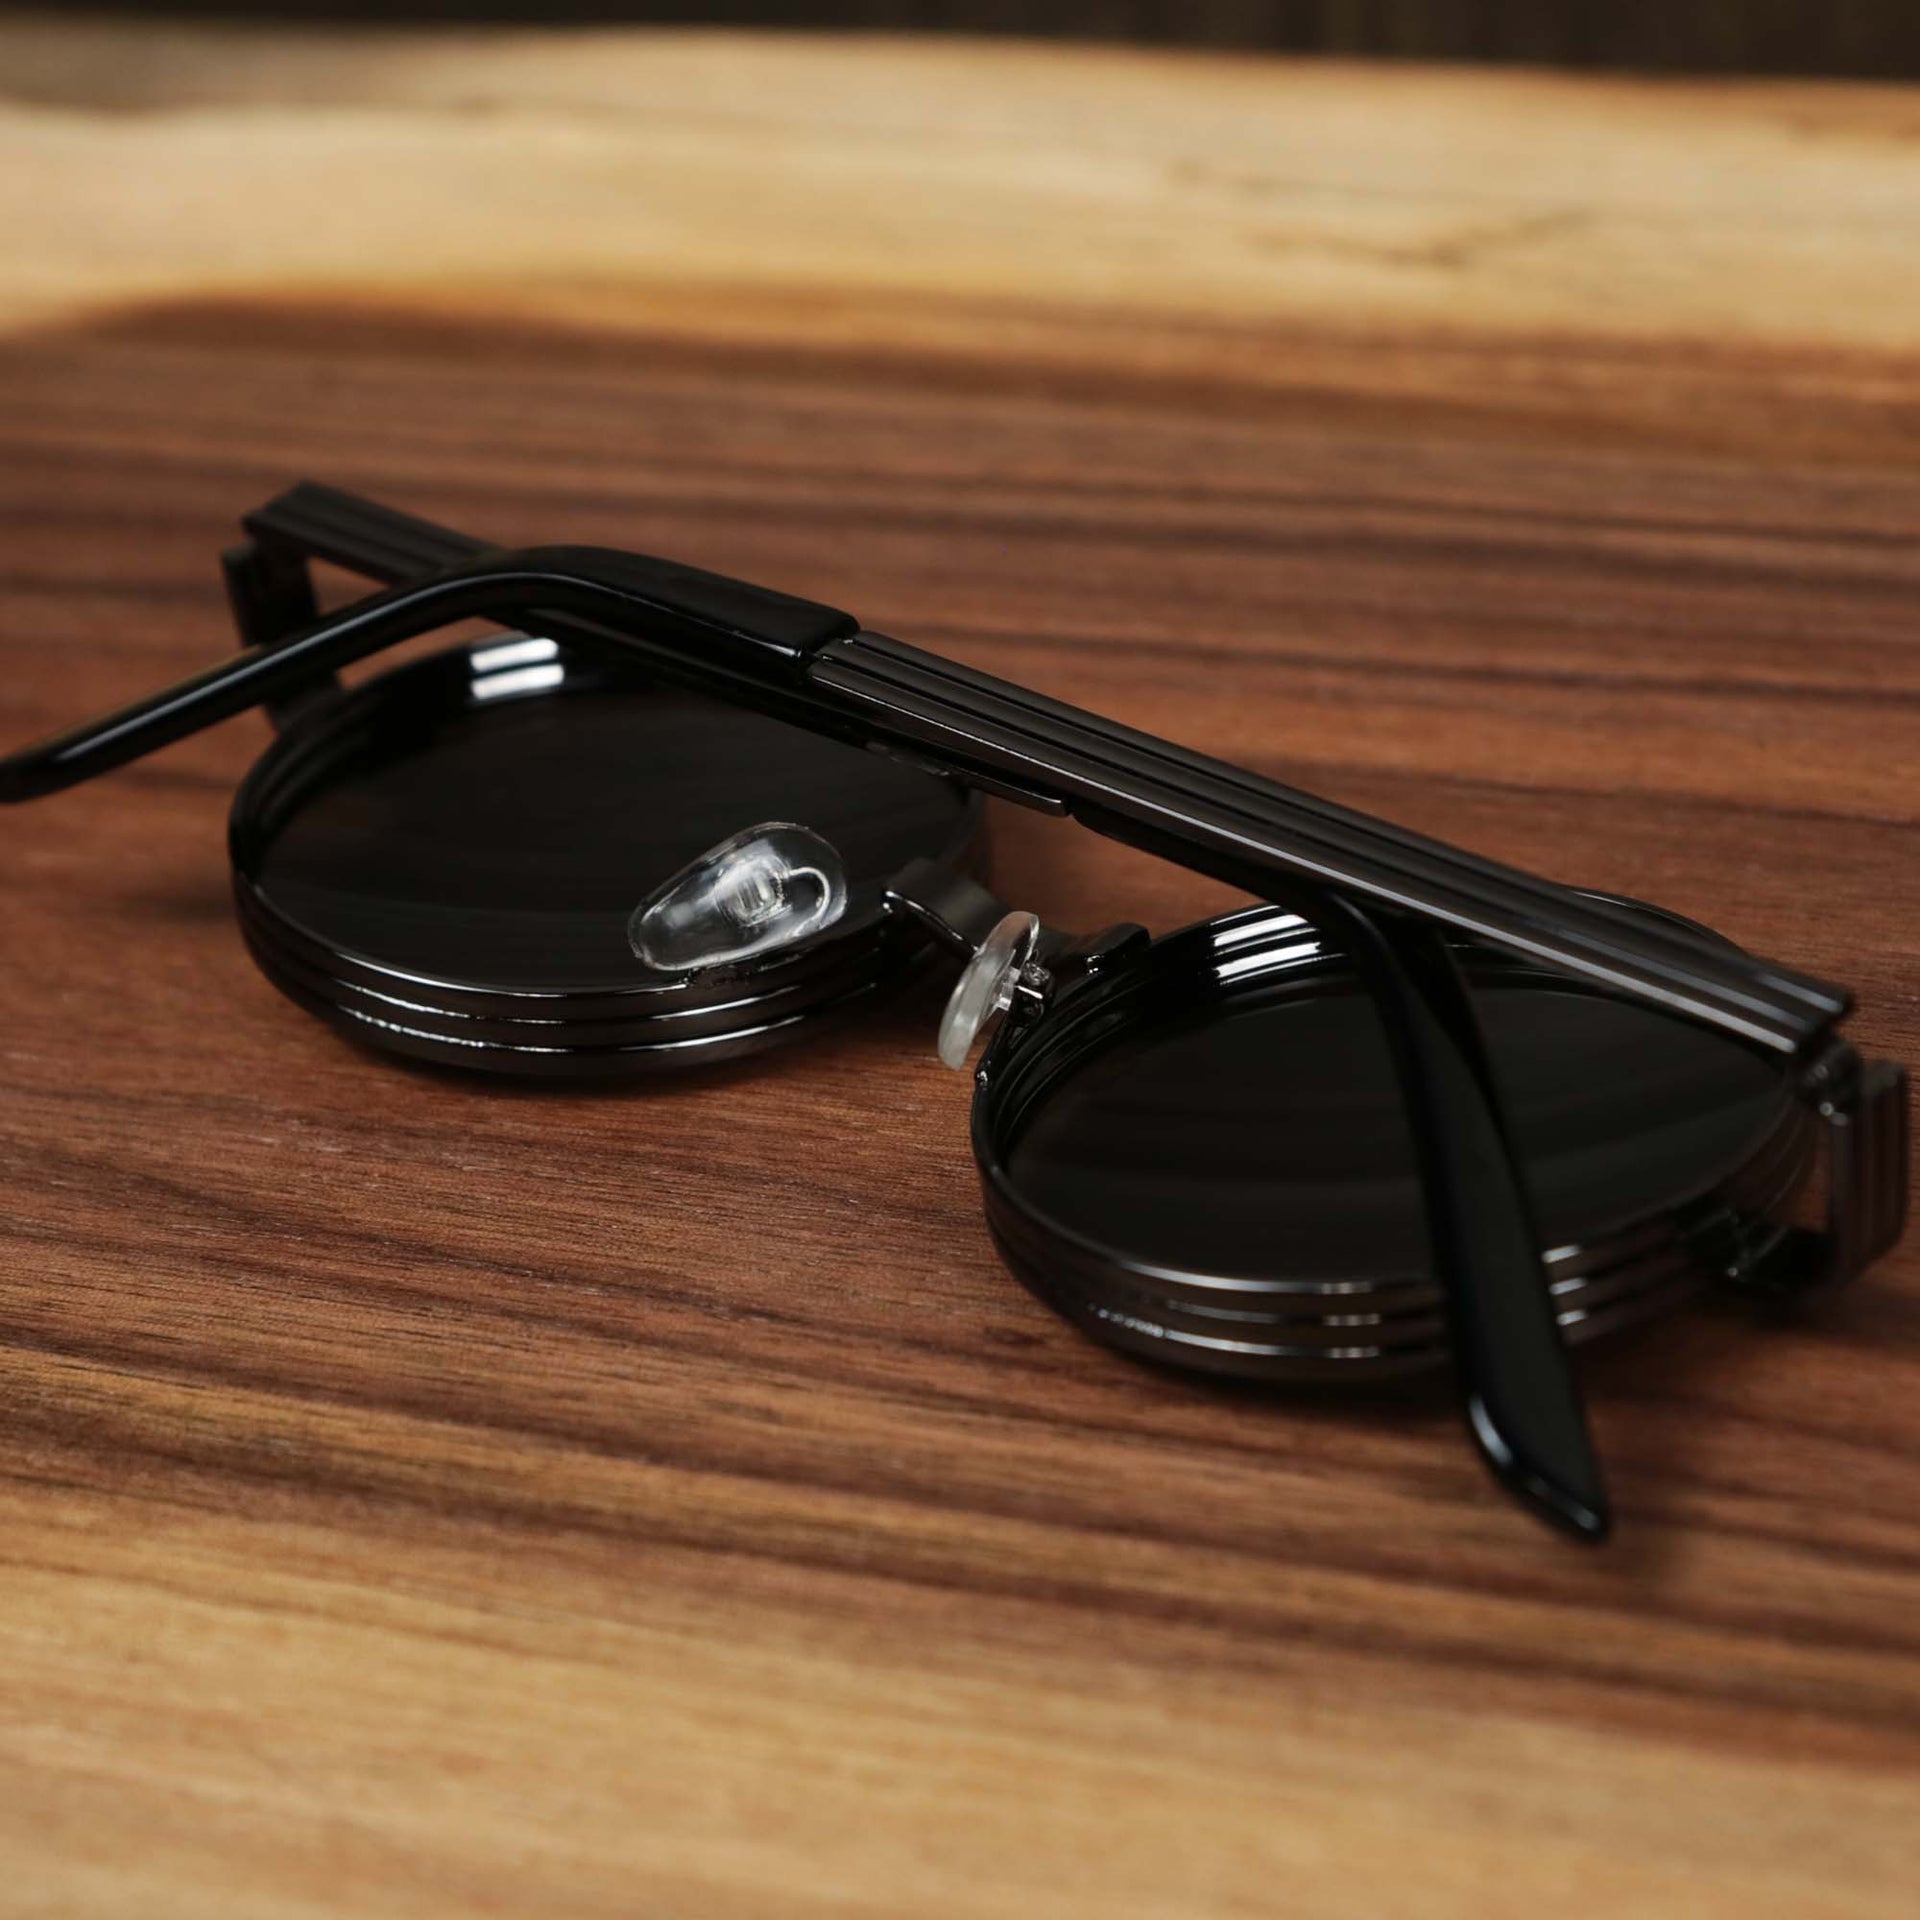 The Round 3 Row Frame Black Lens Sunglasses with Gunmetal Frame folded up